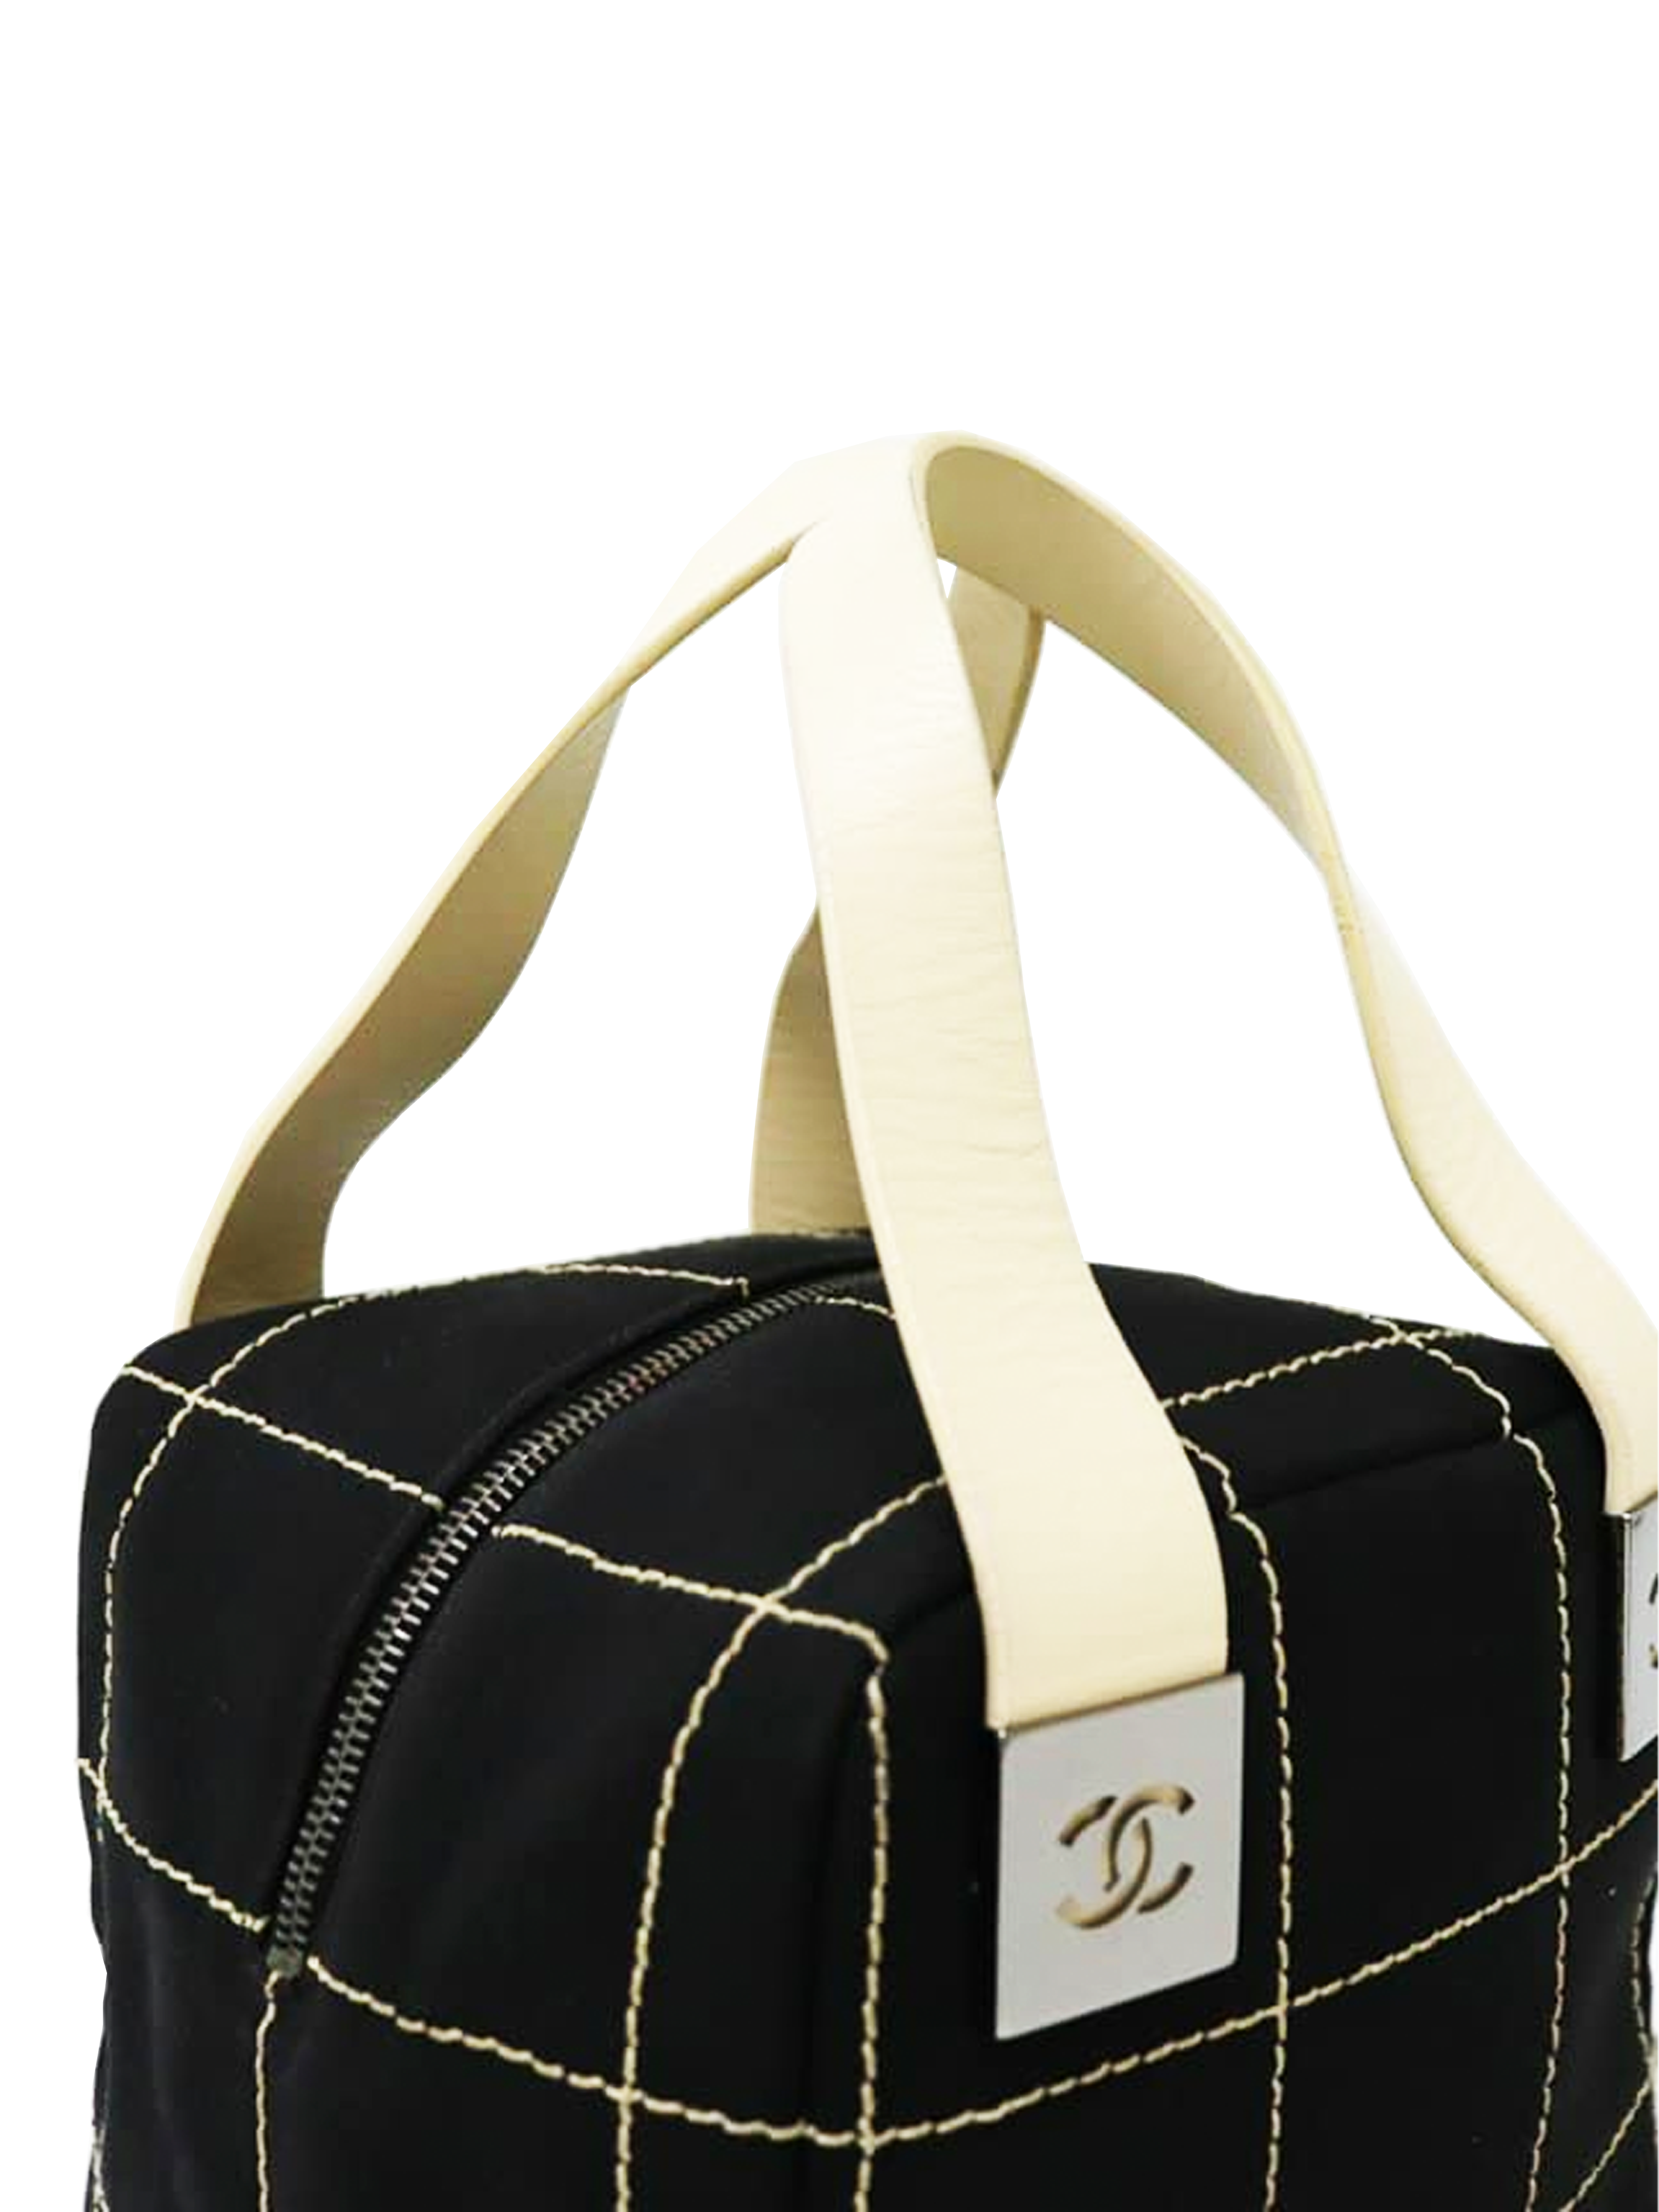 Chanel Coco 2010s Chocolate Bar Handbag · INTO